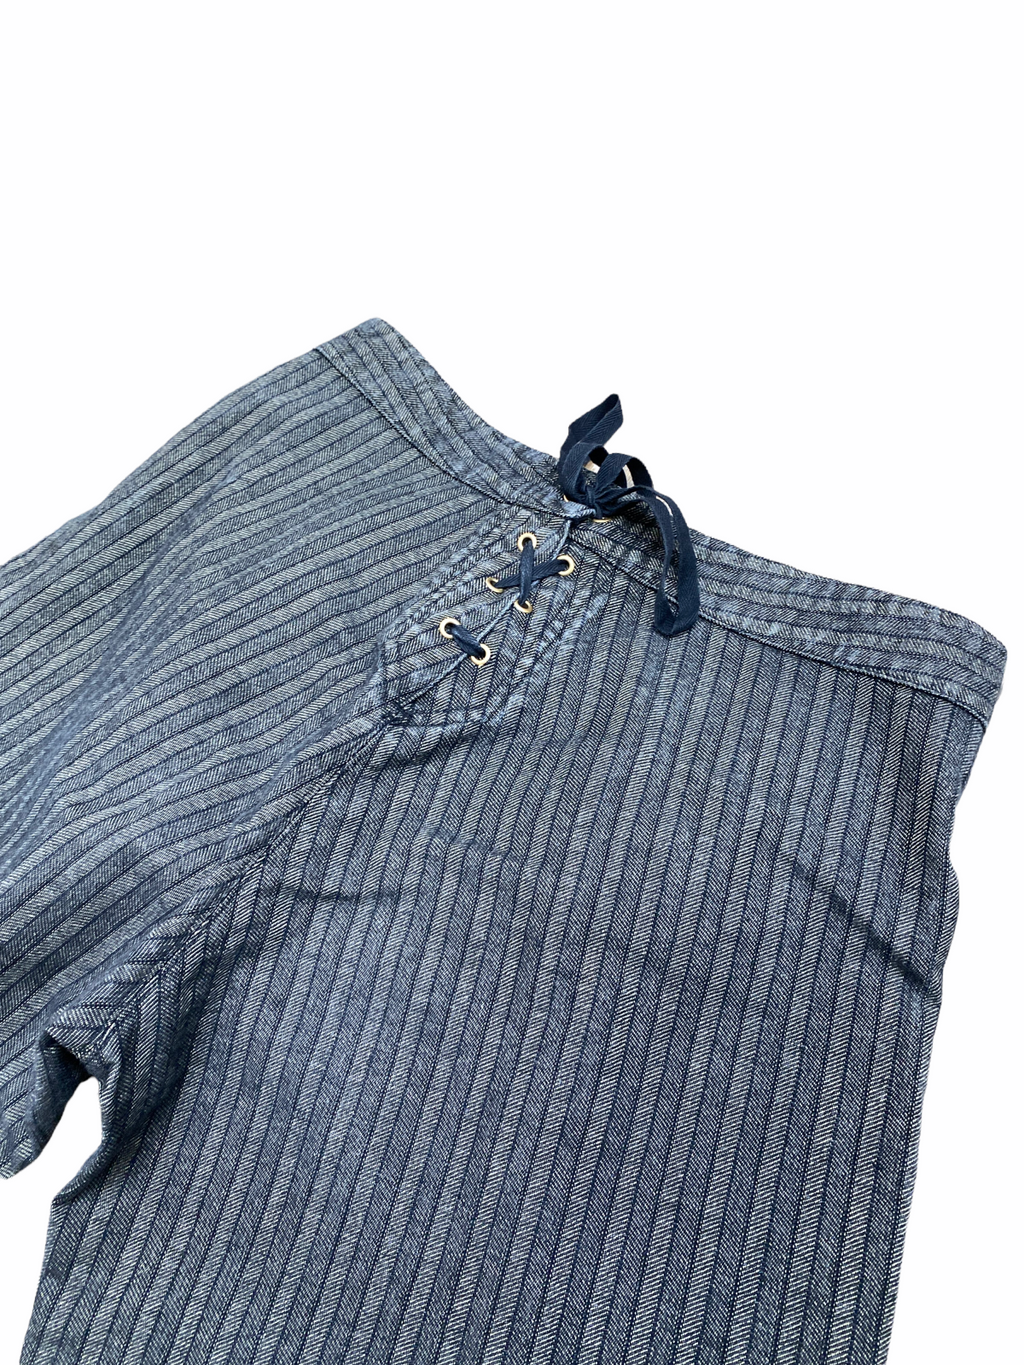 Grey denim Jeans with Suspenders